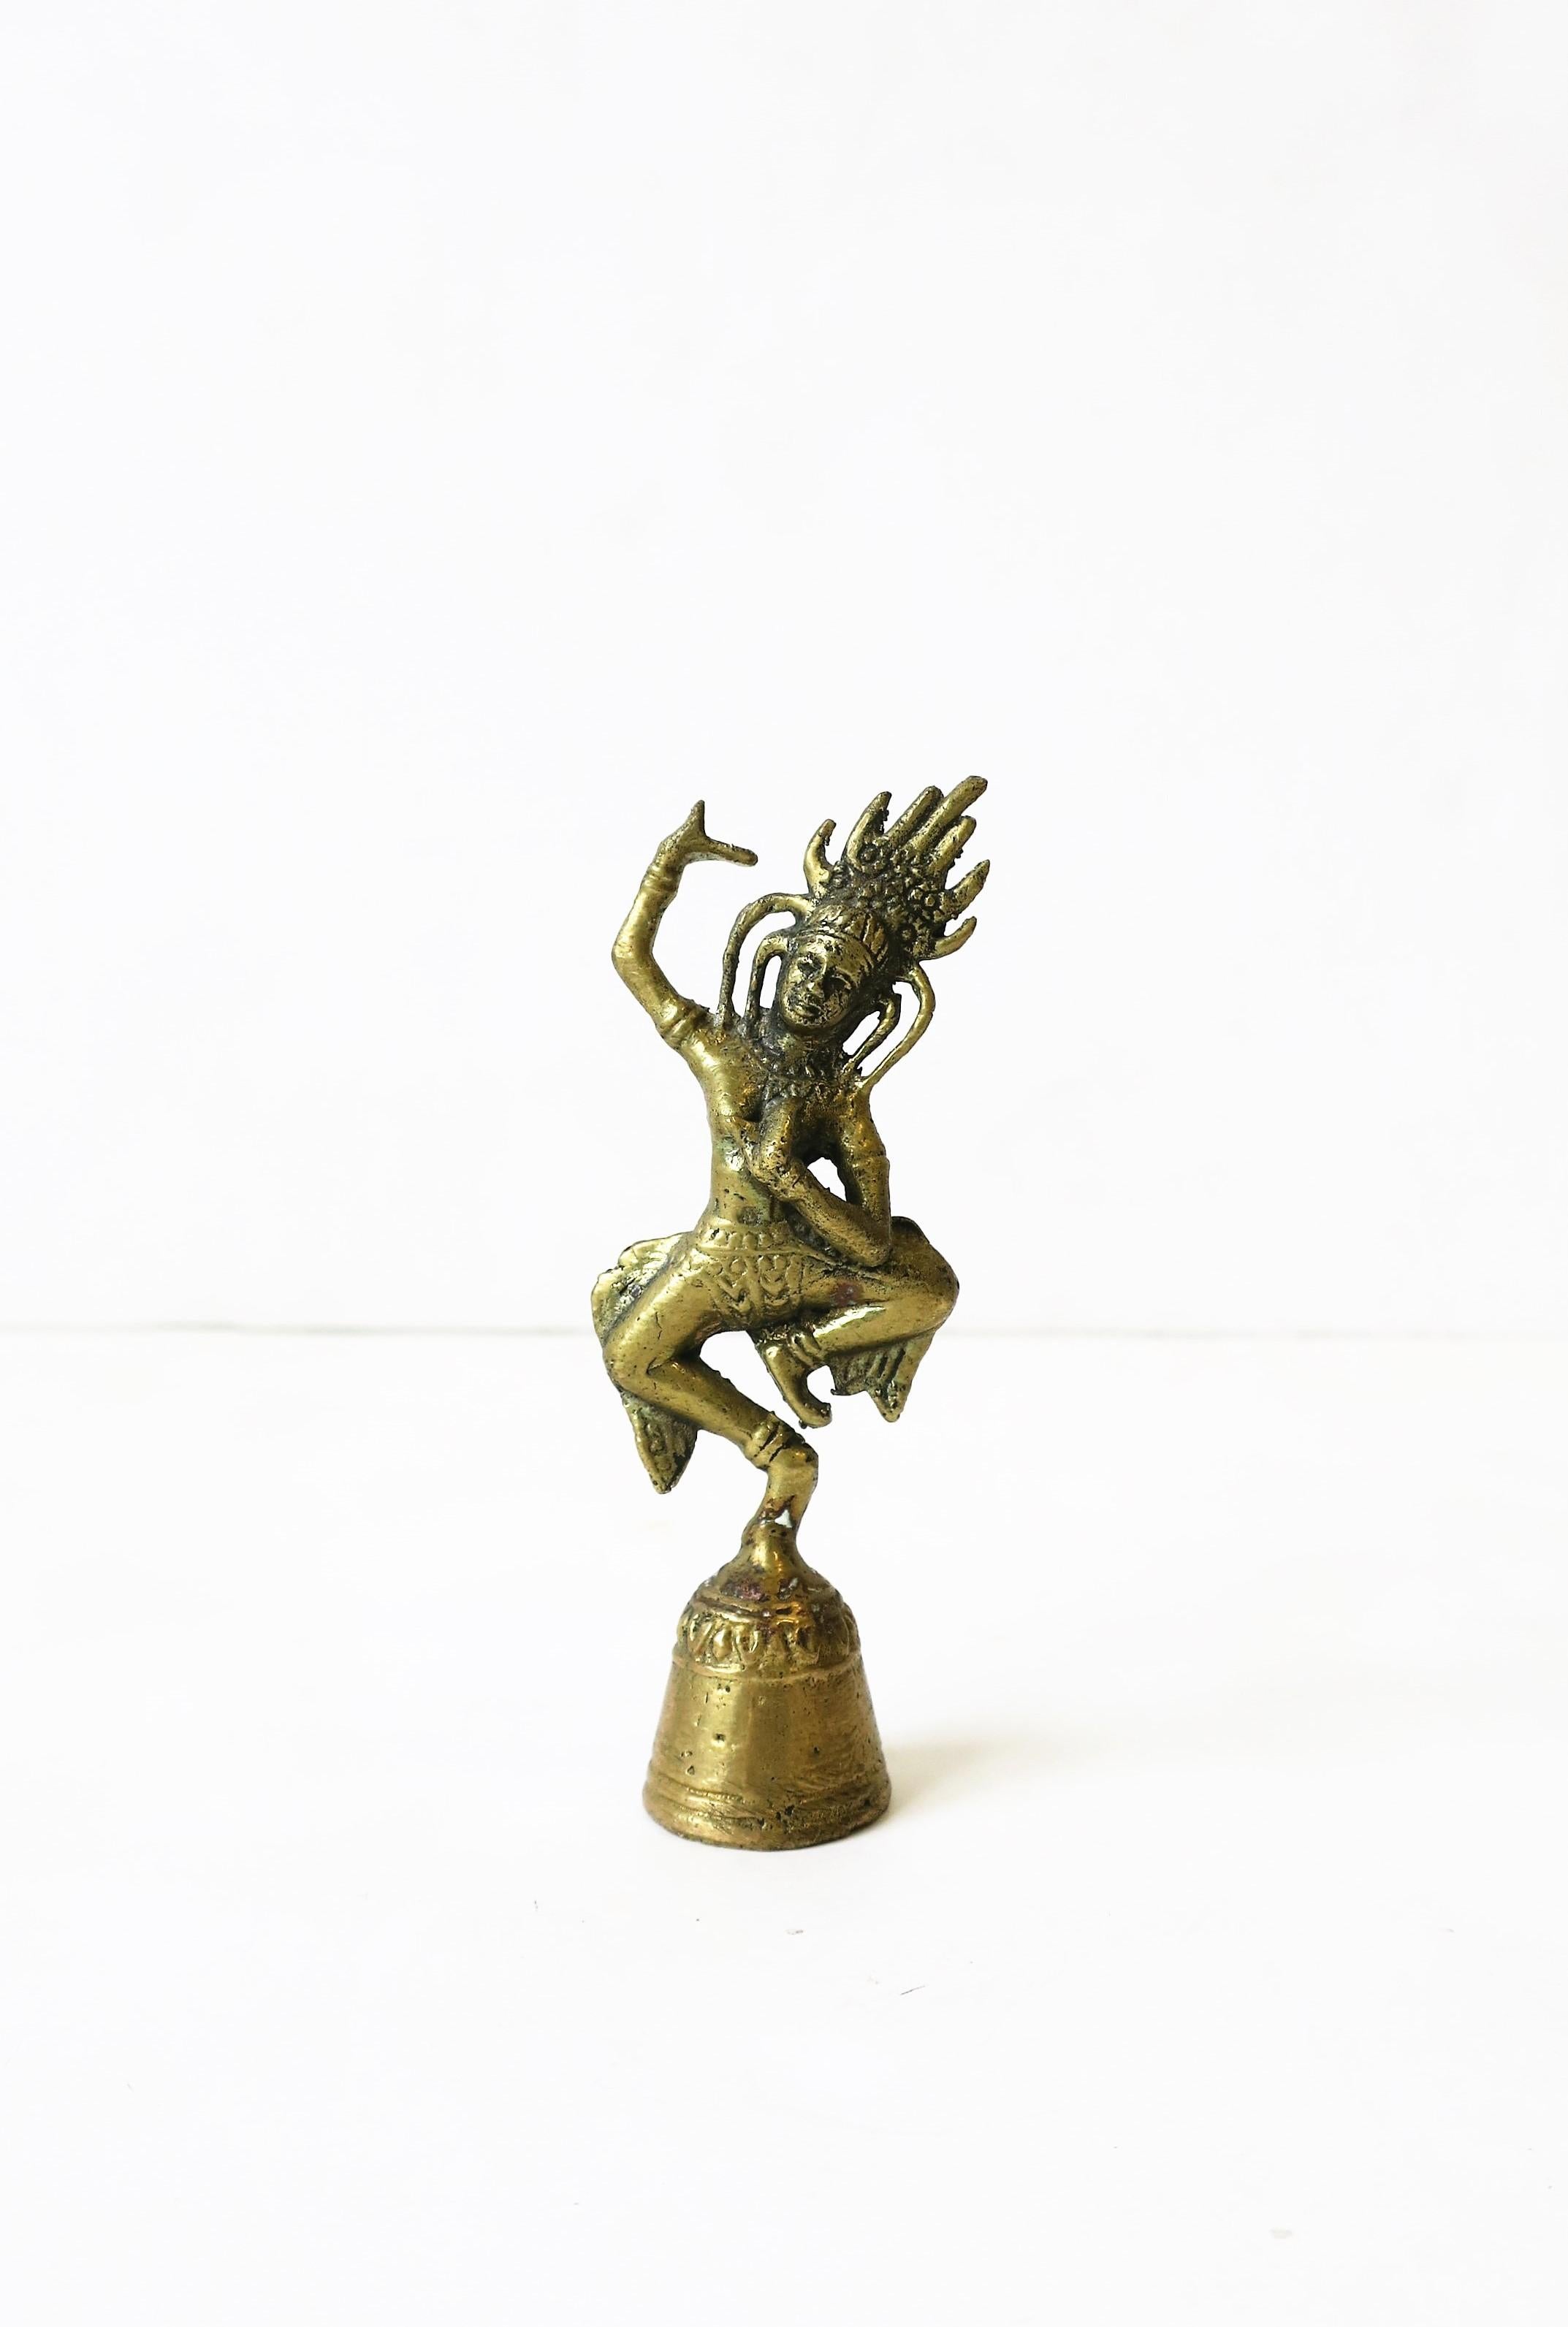 A brass Aspara bell sculpture piece, circa 20th century, Asia. 